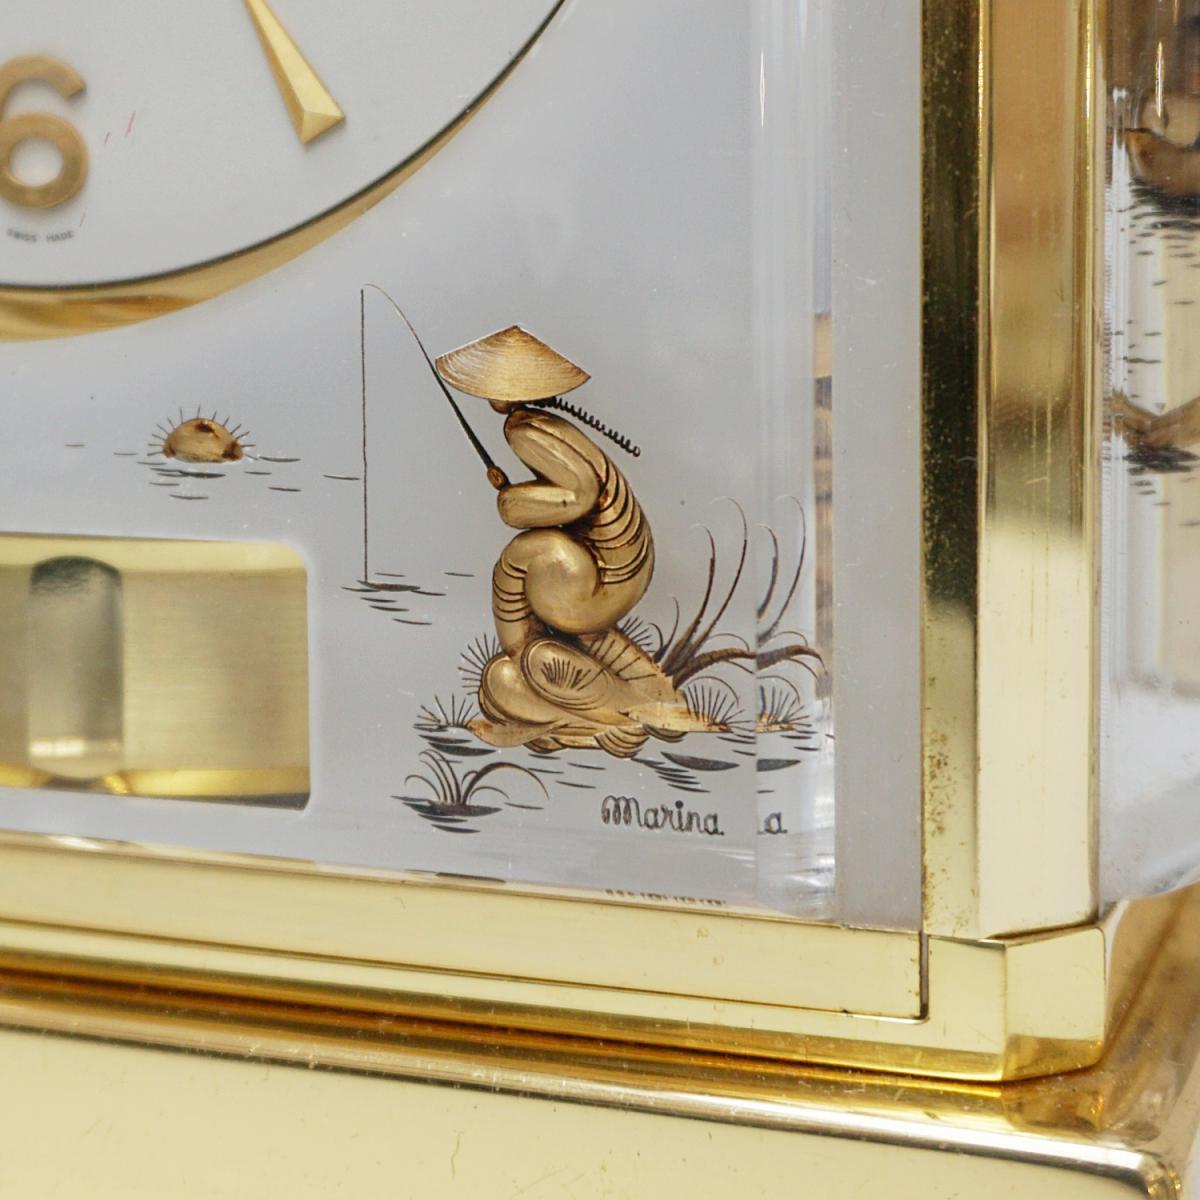 Marina Atmos clock by Jaeger-LeCoultre -Jeroen Markies Art Deco